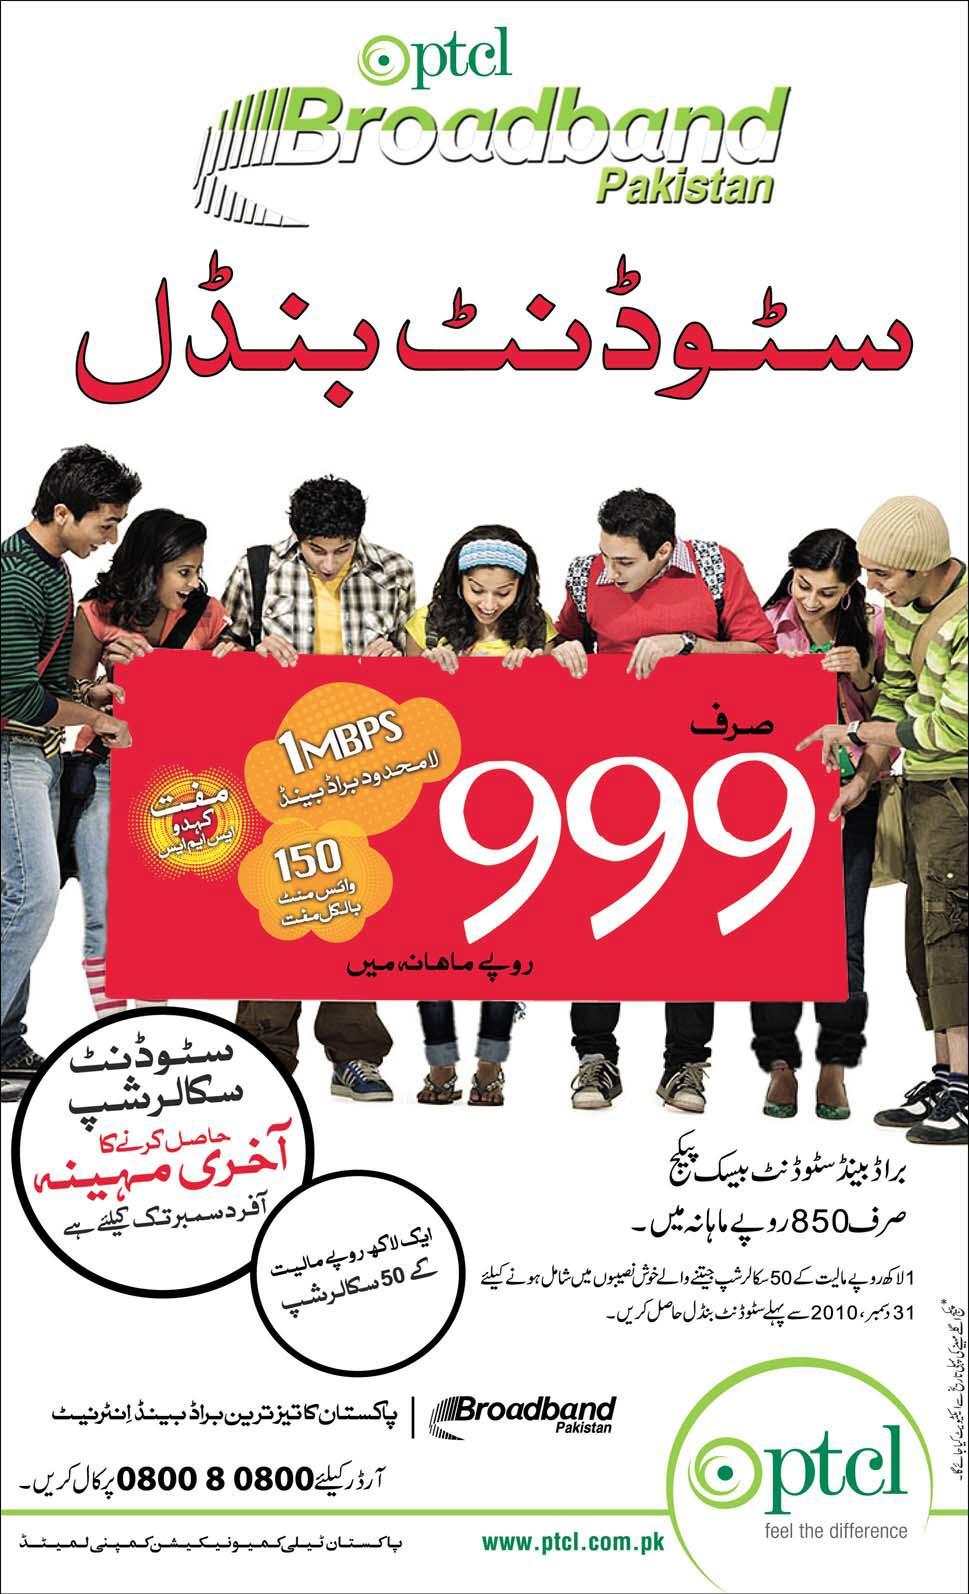 Student Bundle Package of PTCL Broadband Internet - Urdu Advertisement